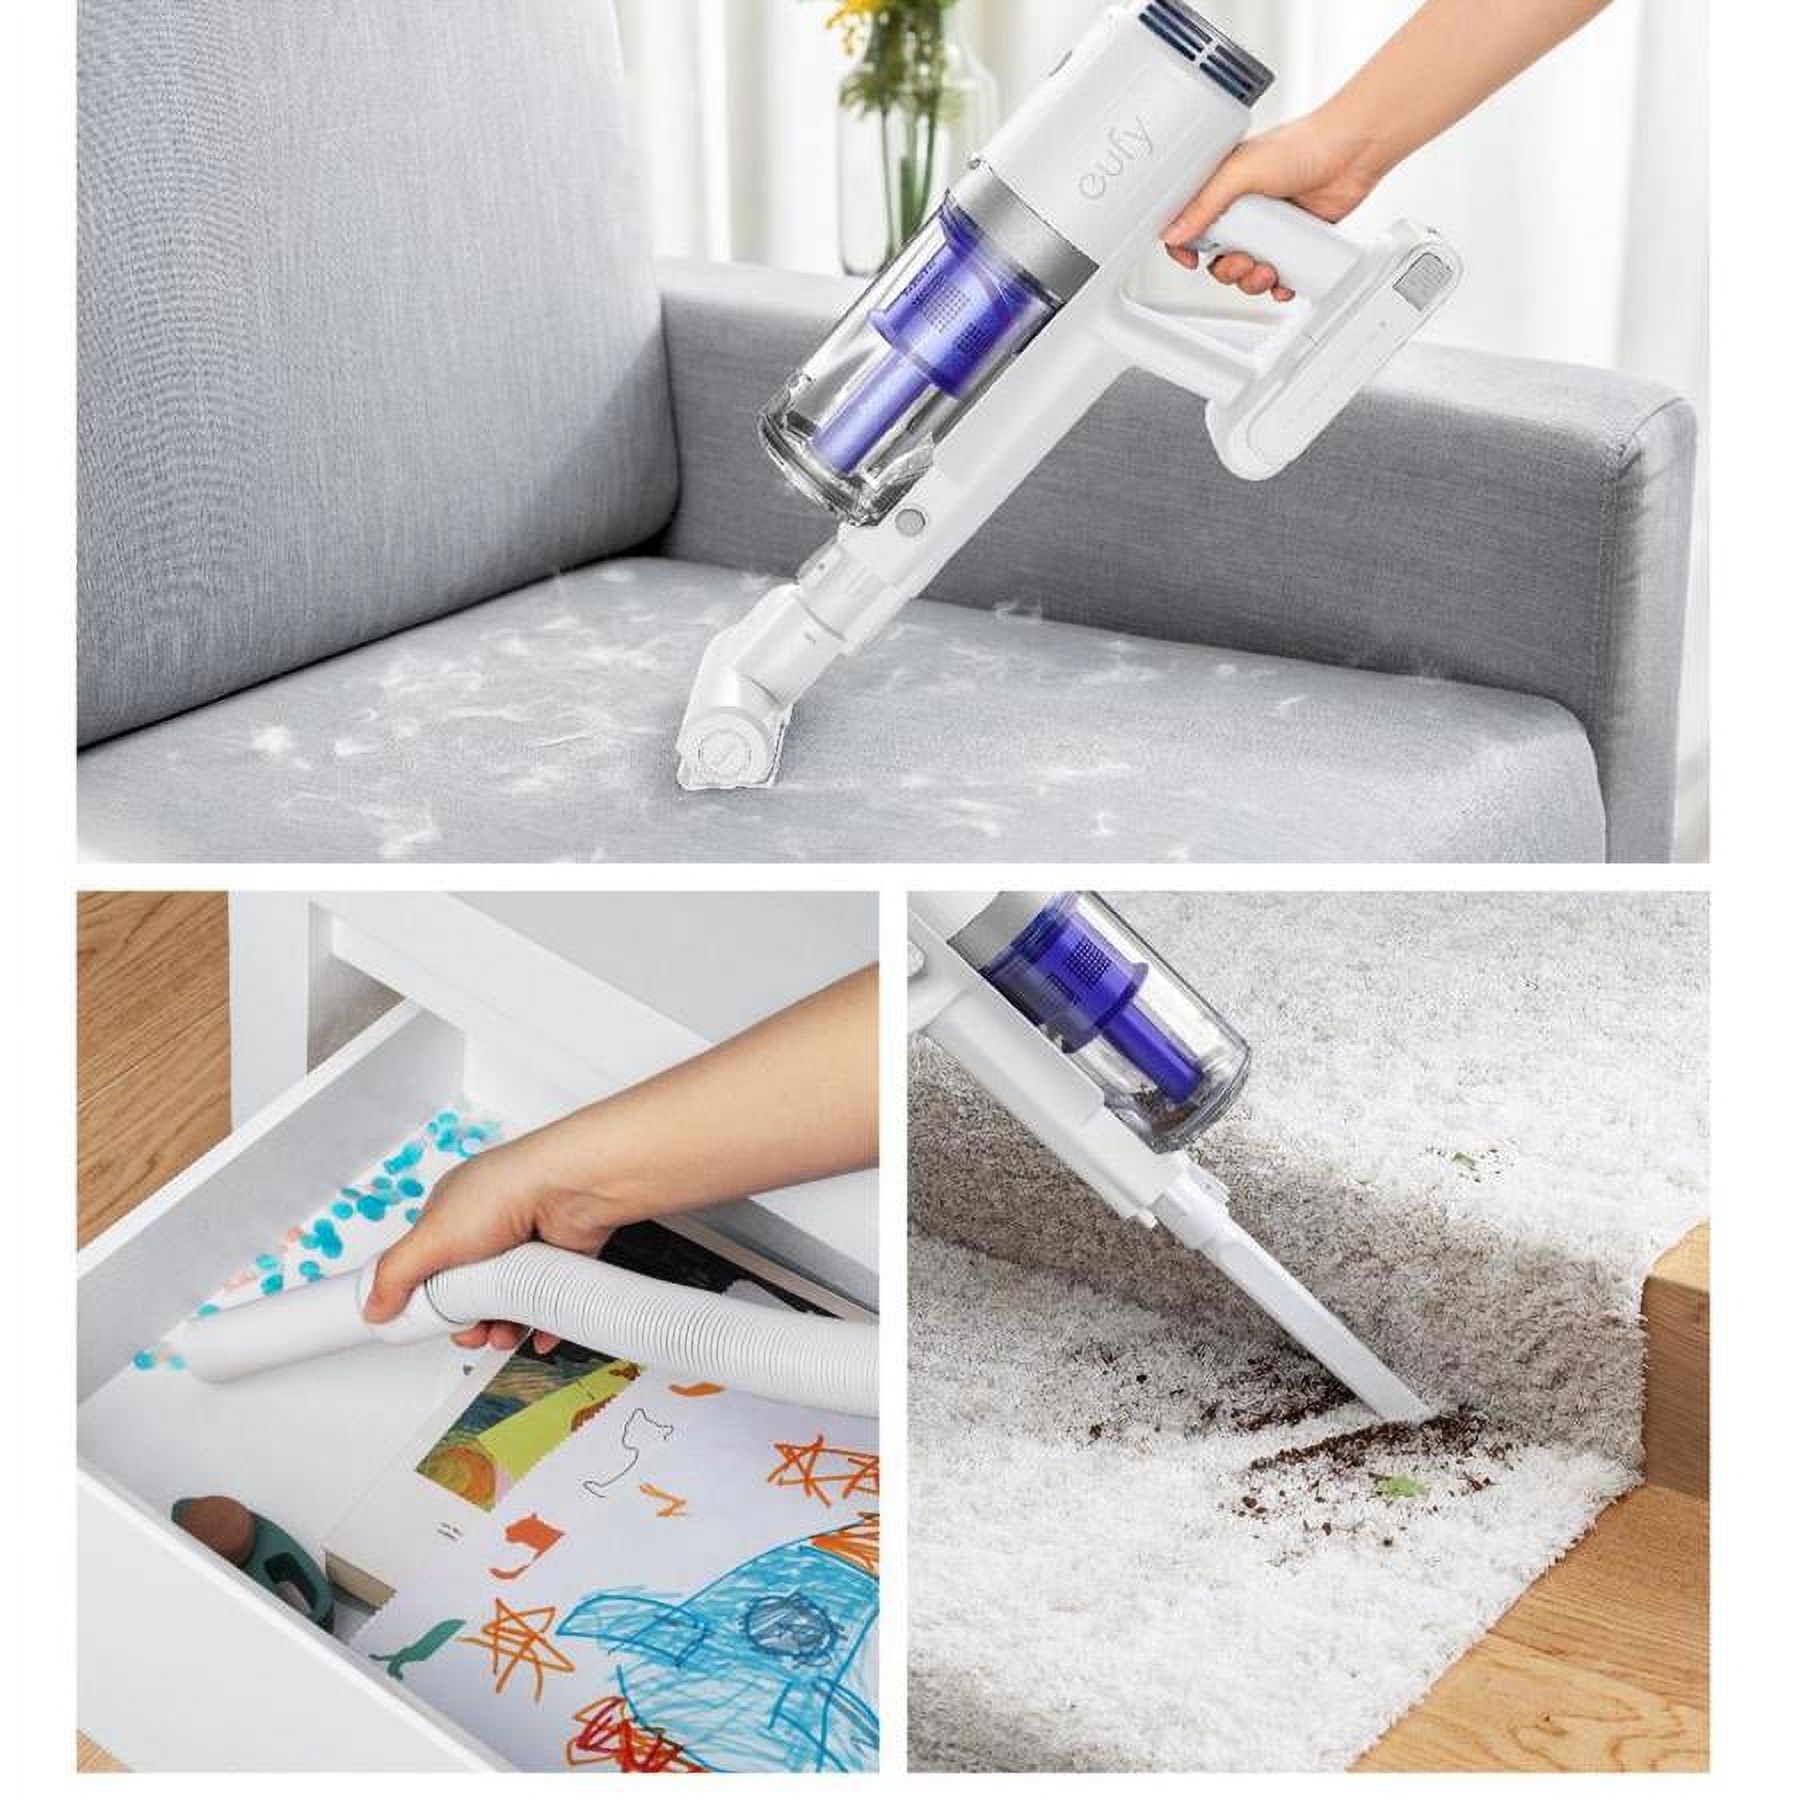 Anker eufy HomeVac S11 Reach, Handstick Vaccum Cleaner - image 6 of 6